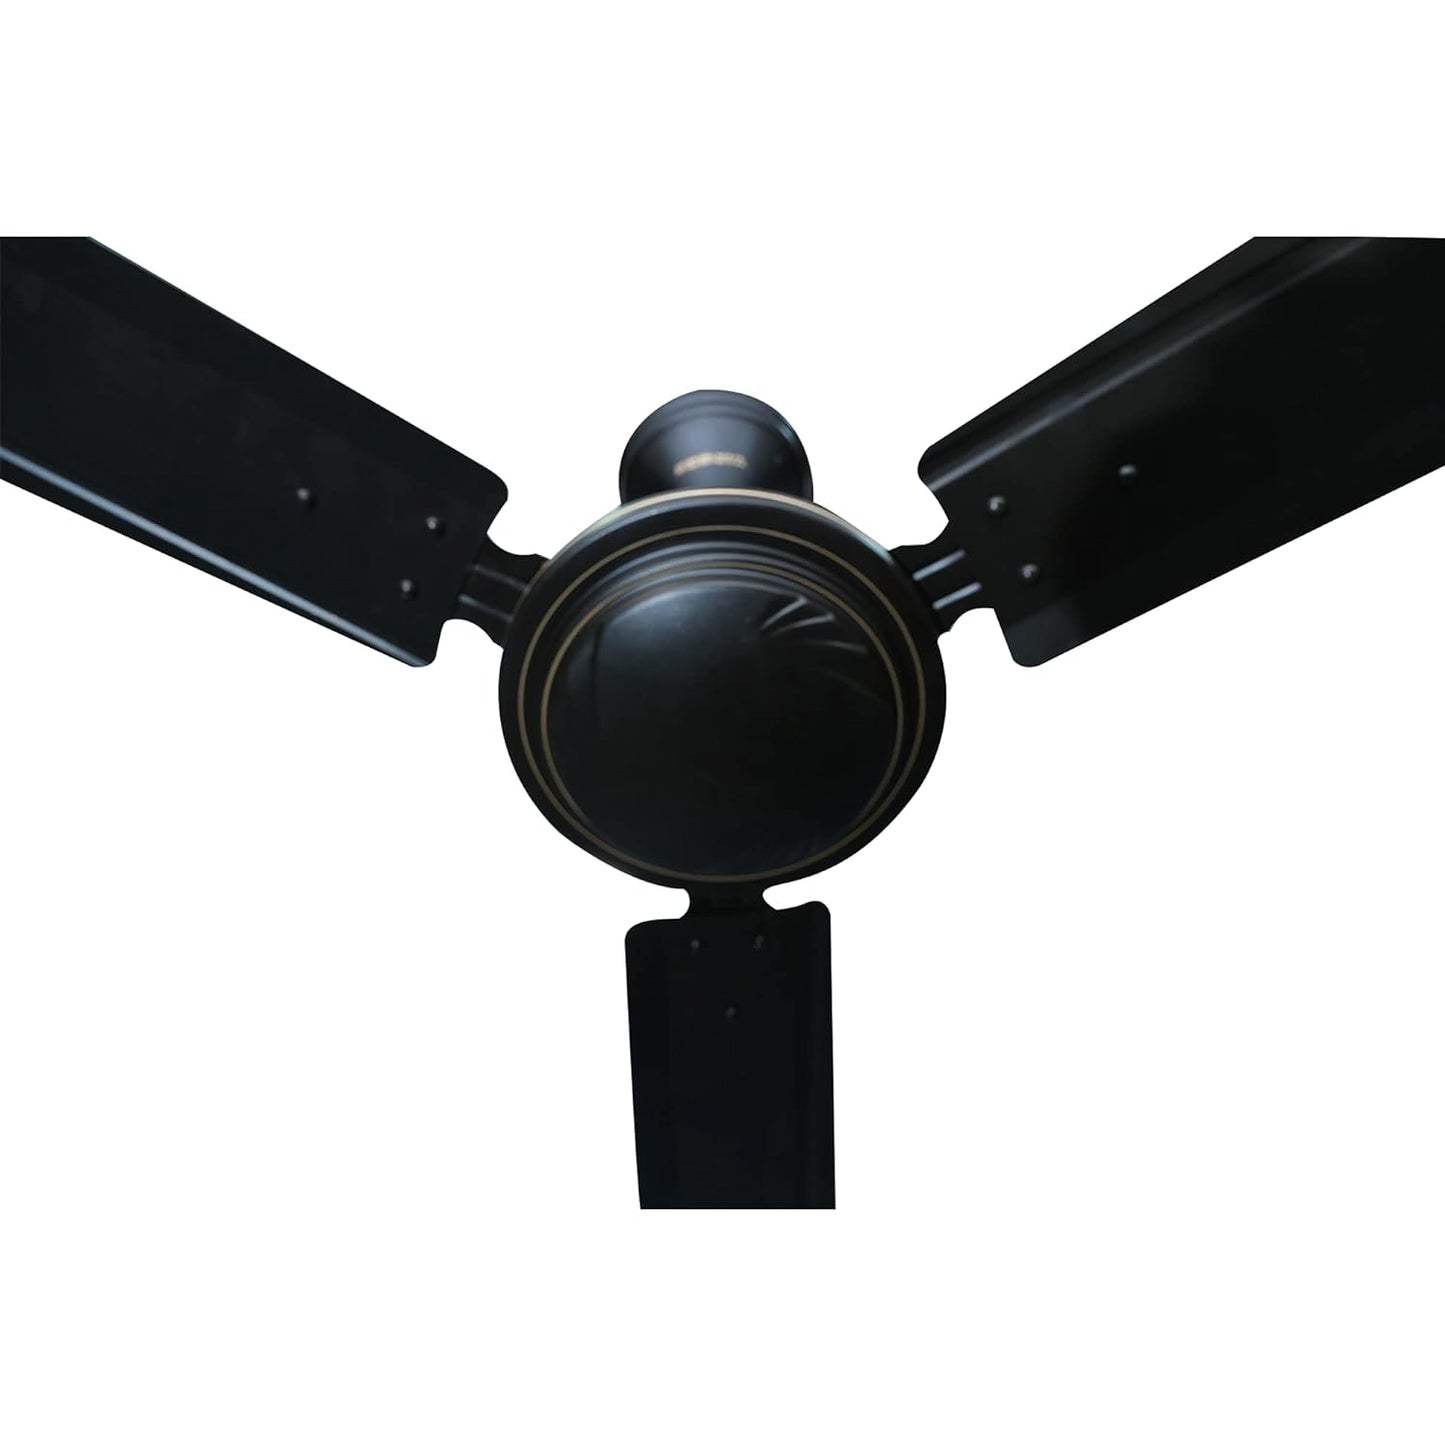 AEGON Shatabdi Plus 1200 mm (48 inch) 3 Blade Copper Motor High Speed Decorative Ceiling Fan (Smoke Brown)